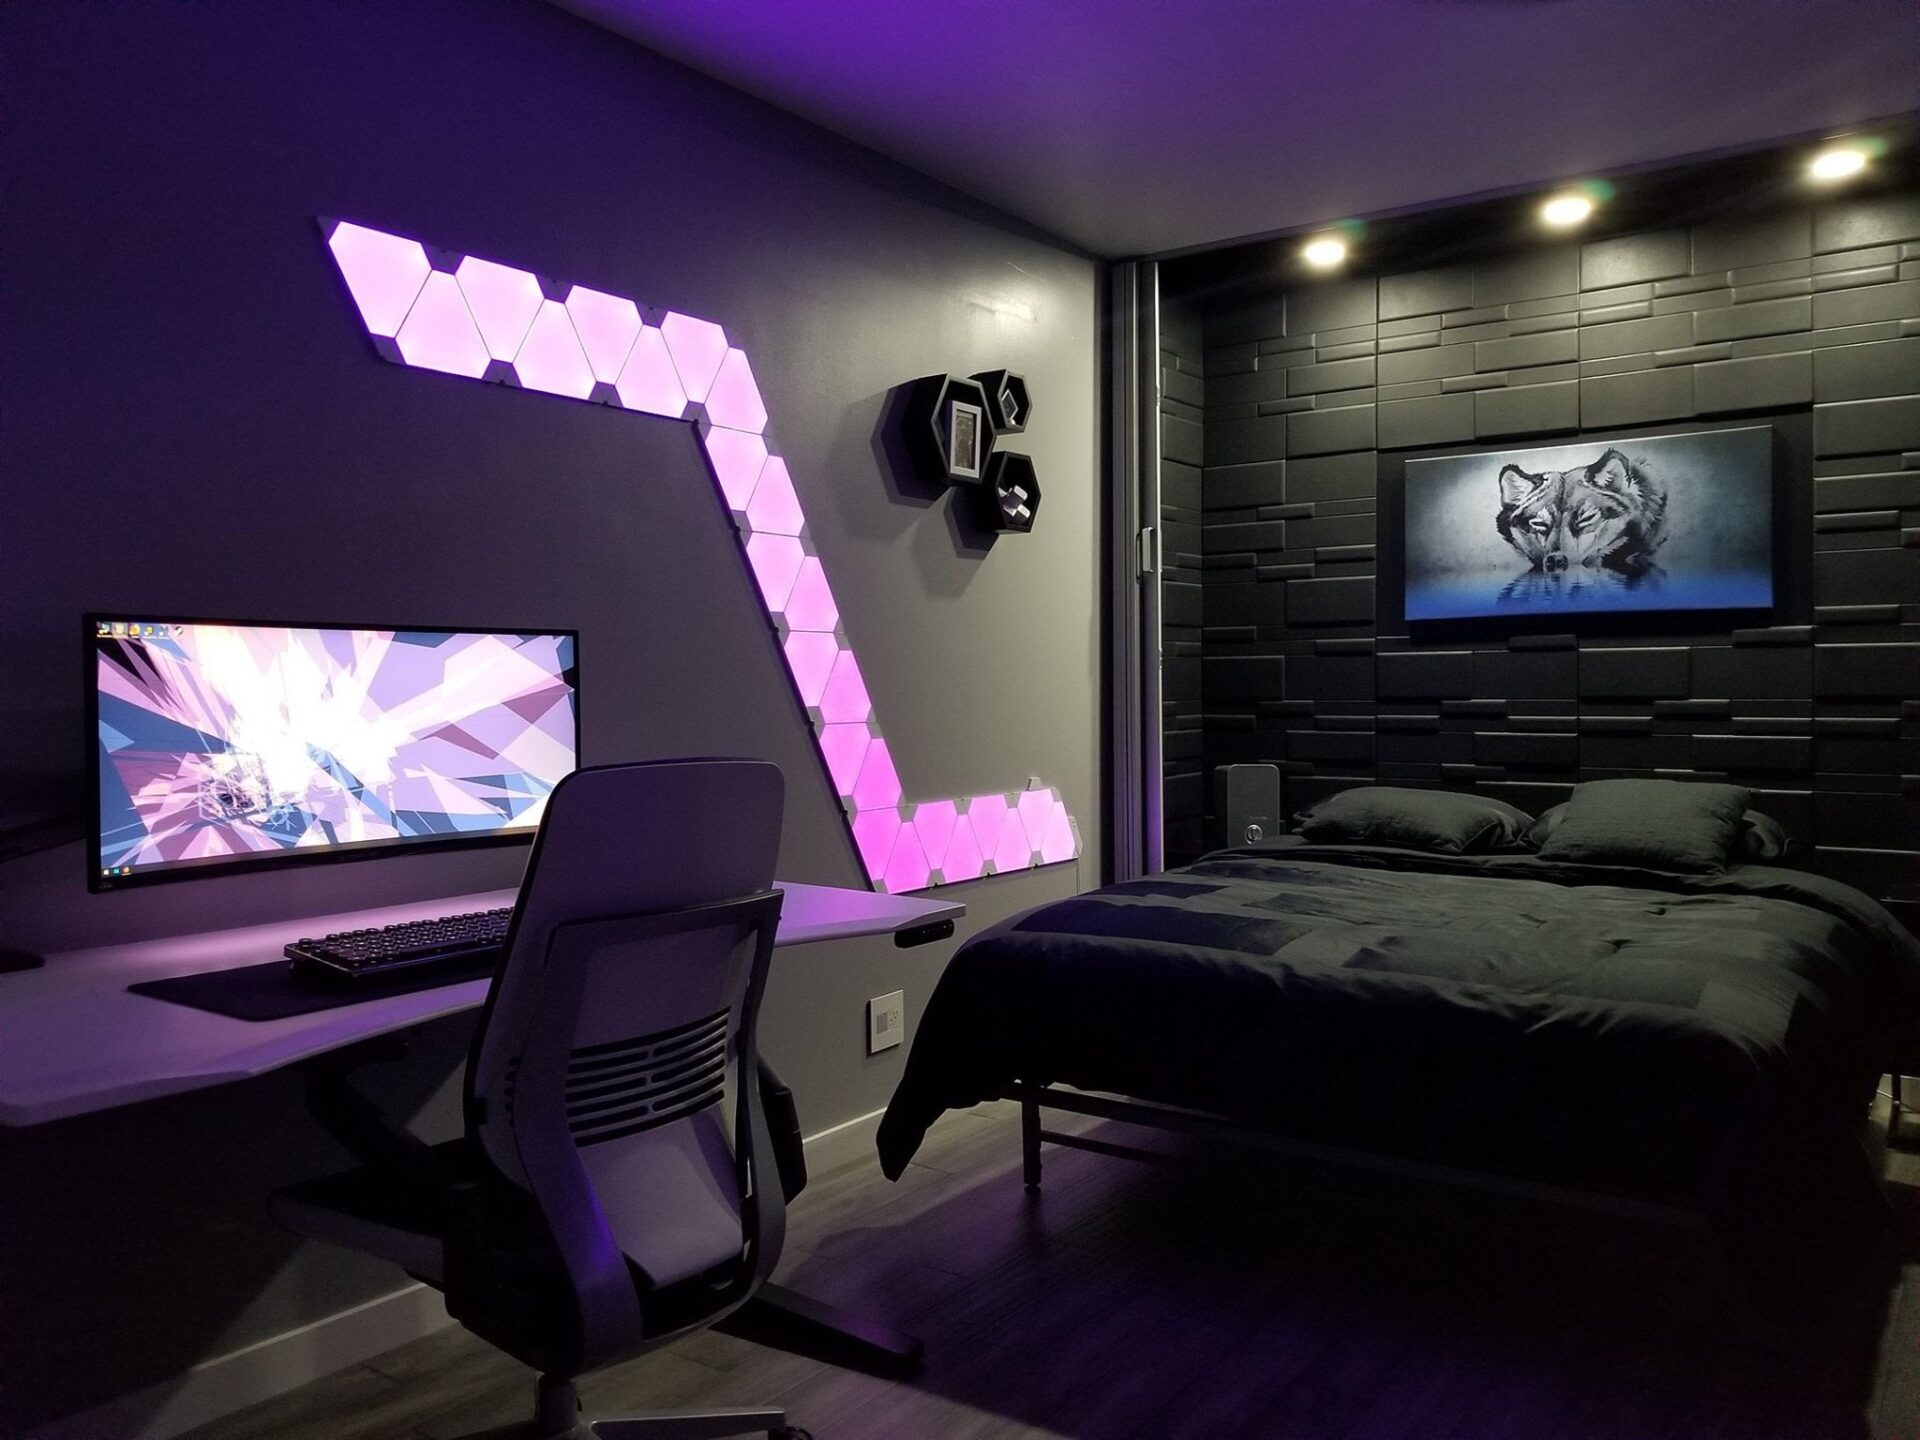 Gamer Bedroom